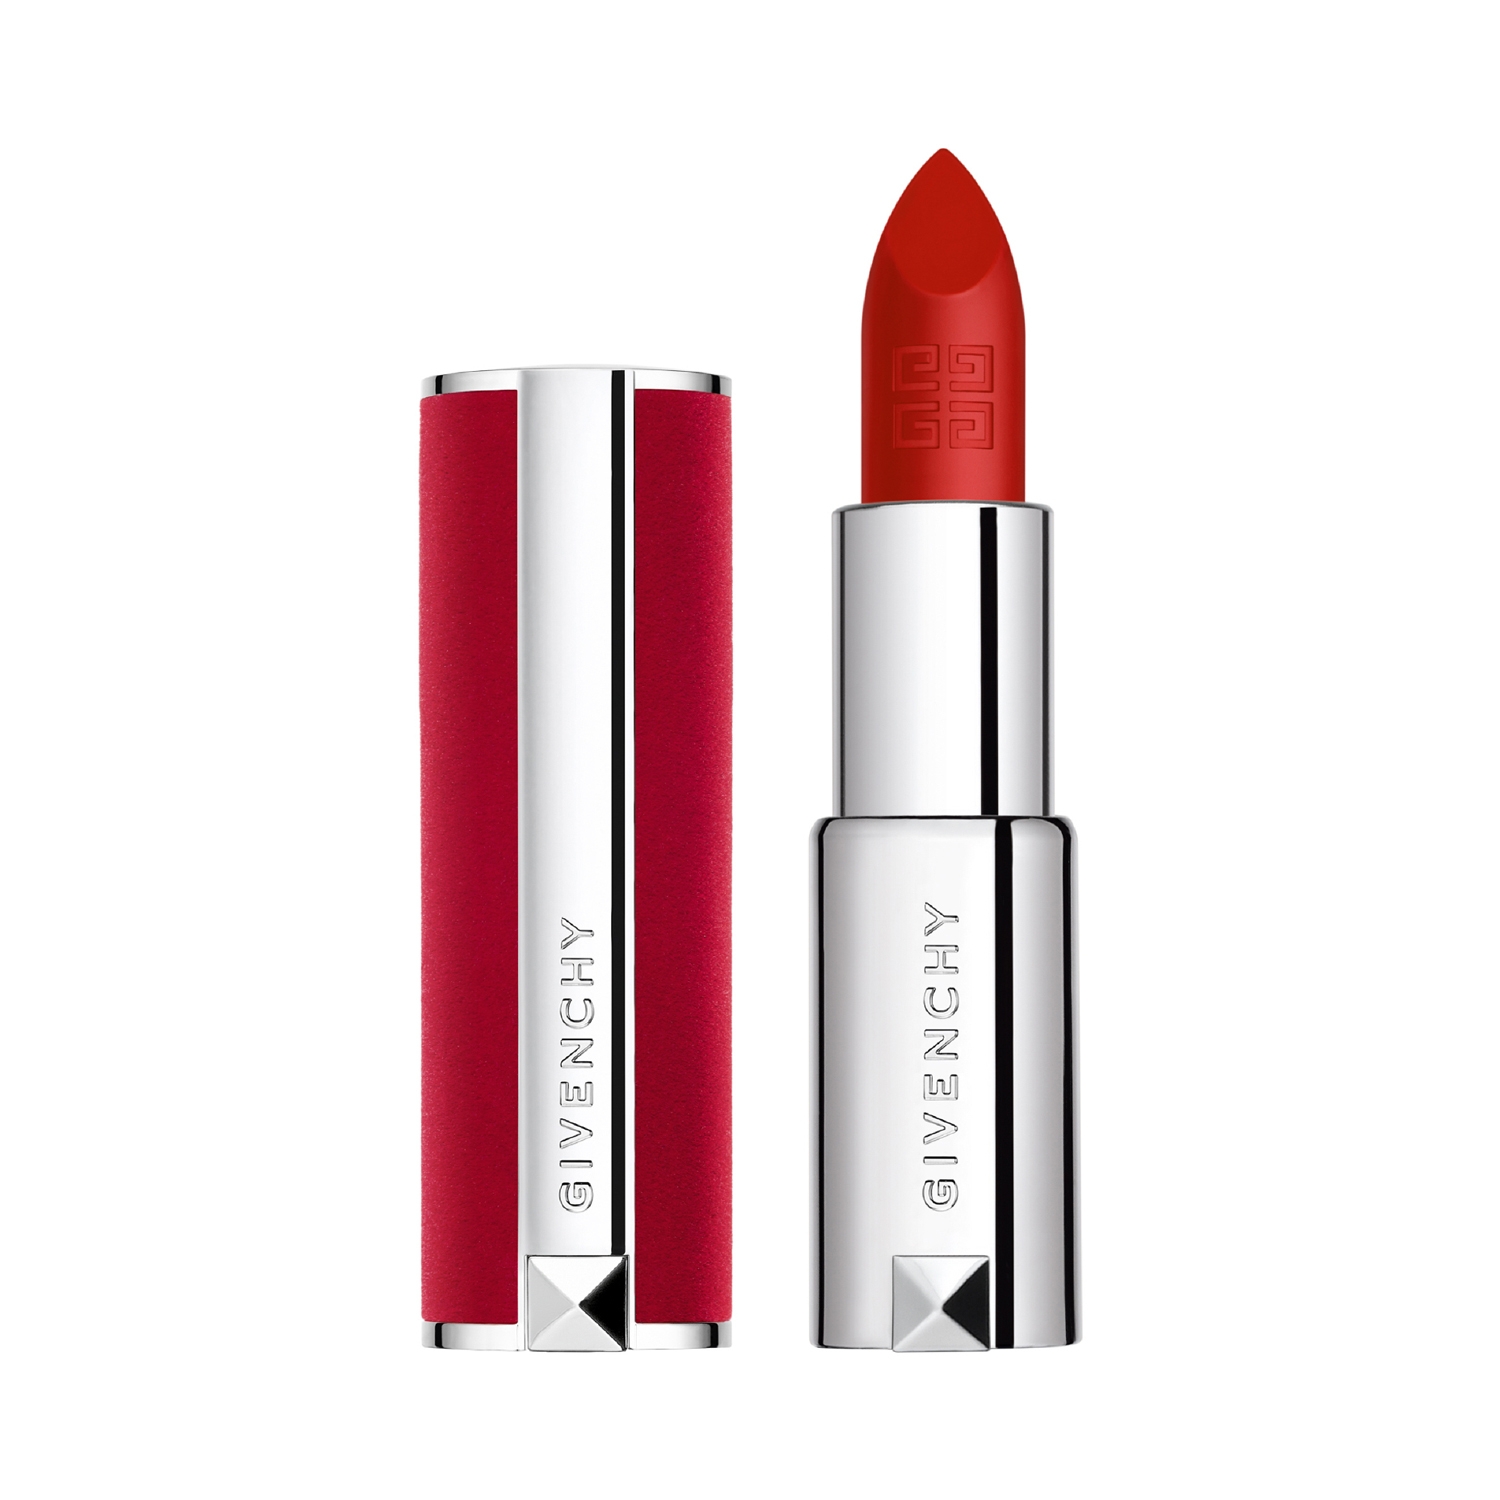 Givenchy | Givenchy Le Rouge Deep Velvet Lipstick - N 36 L'Interdit (3.4g)